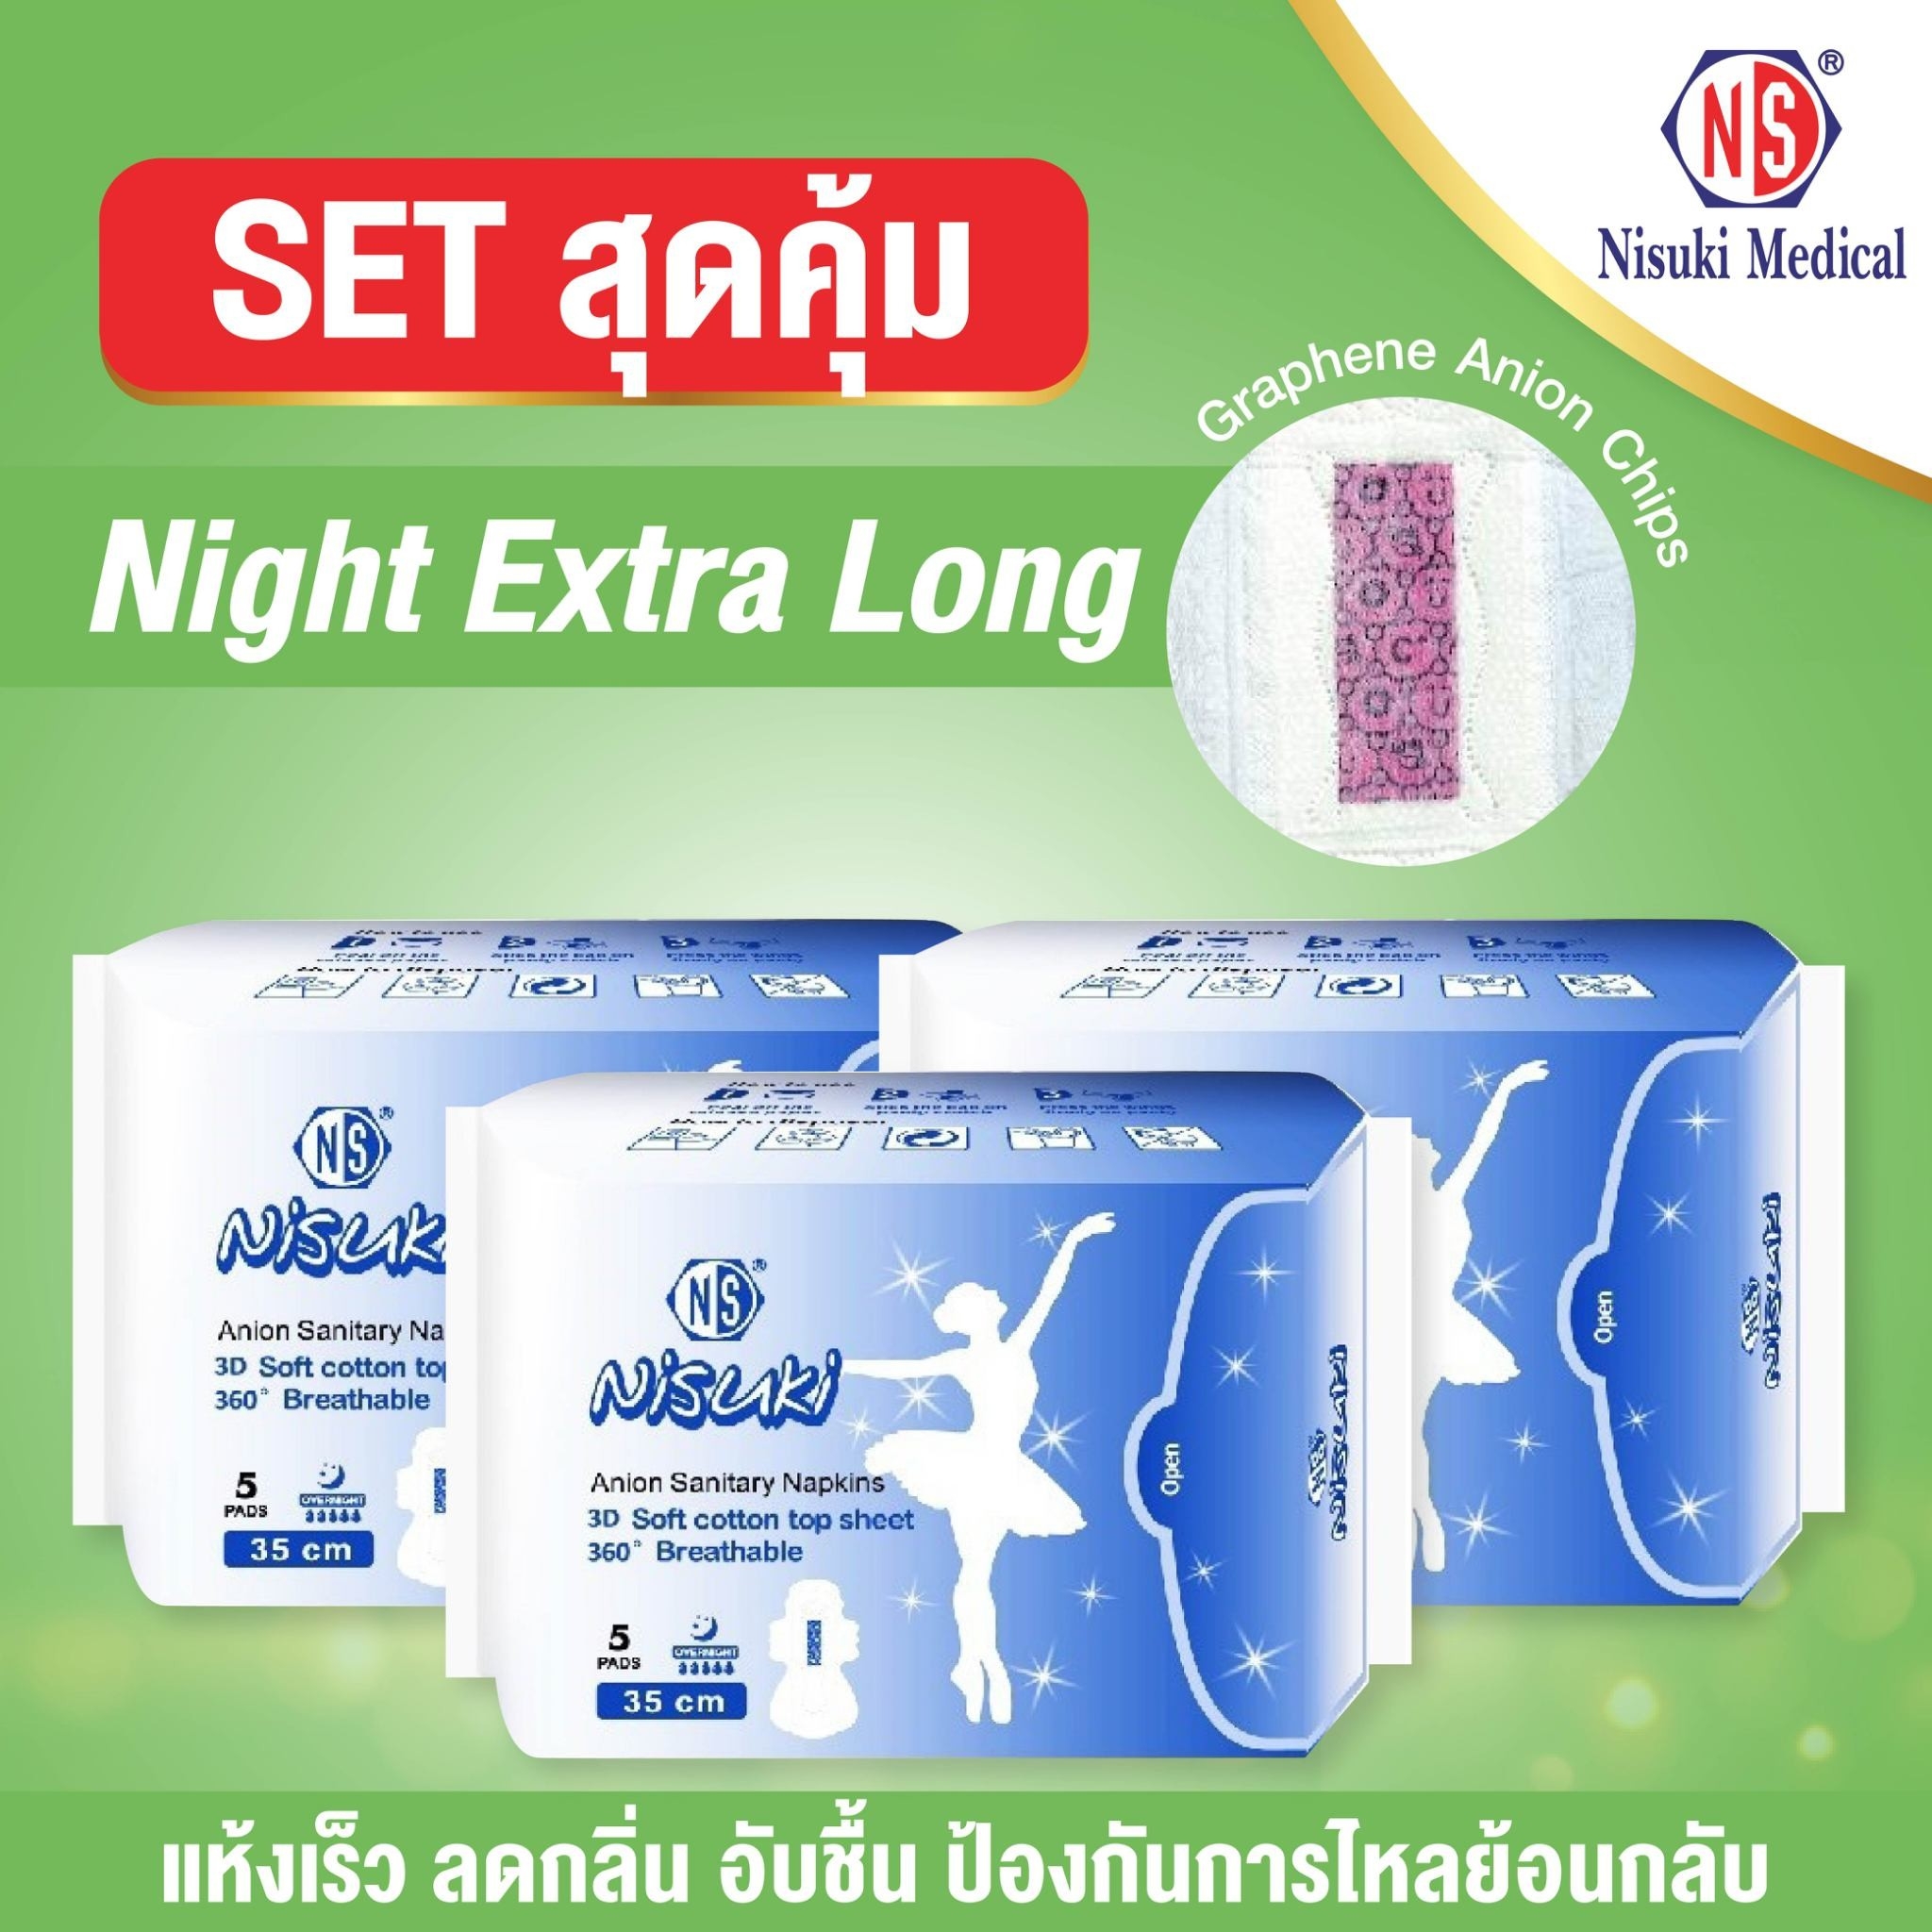 SET สุดคุ้ม ผ้าอนามัยไอออน สำหรับกลางคืน(วันมามาก) Nisuki Anion Sanitary Napkin NIGHT LONG จำนวน 3 ห่อ